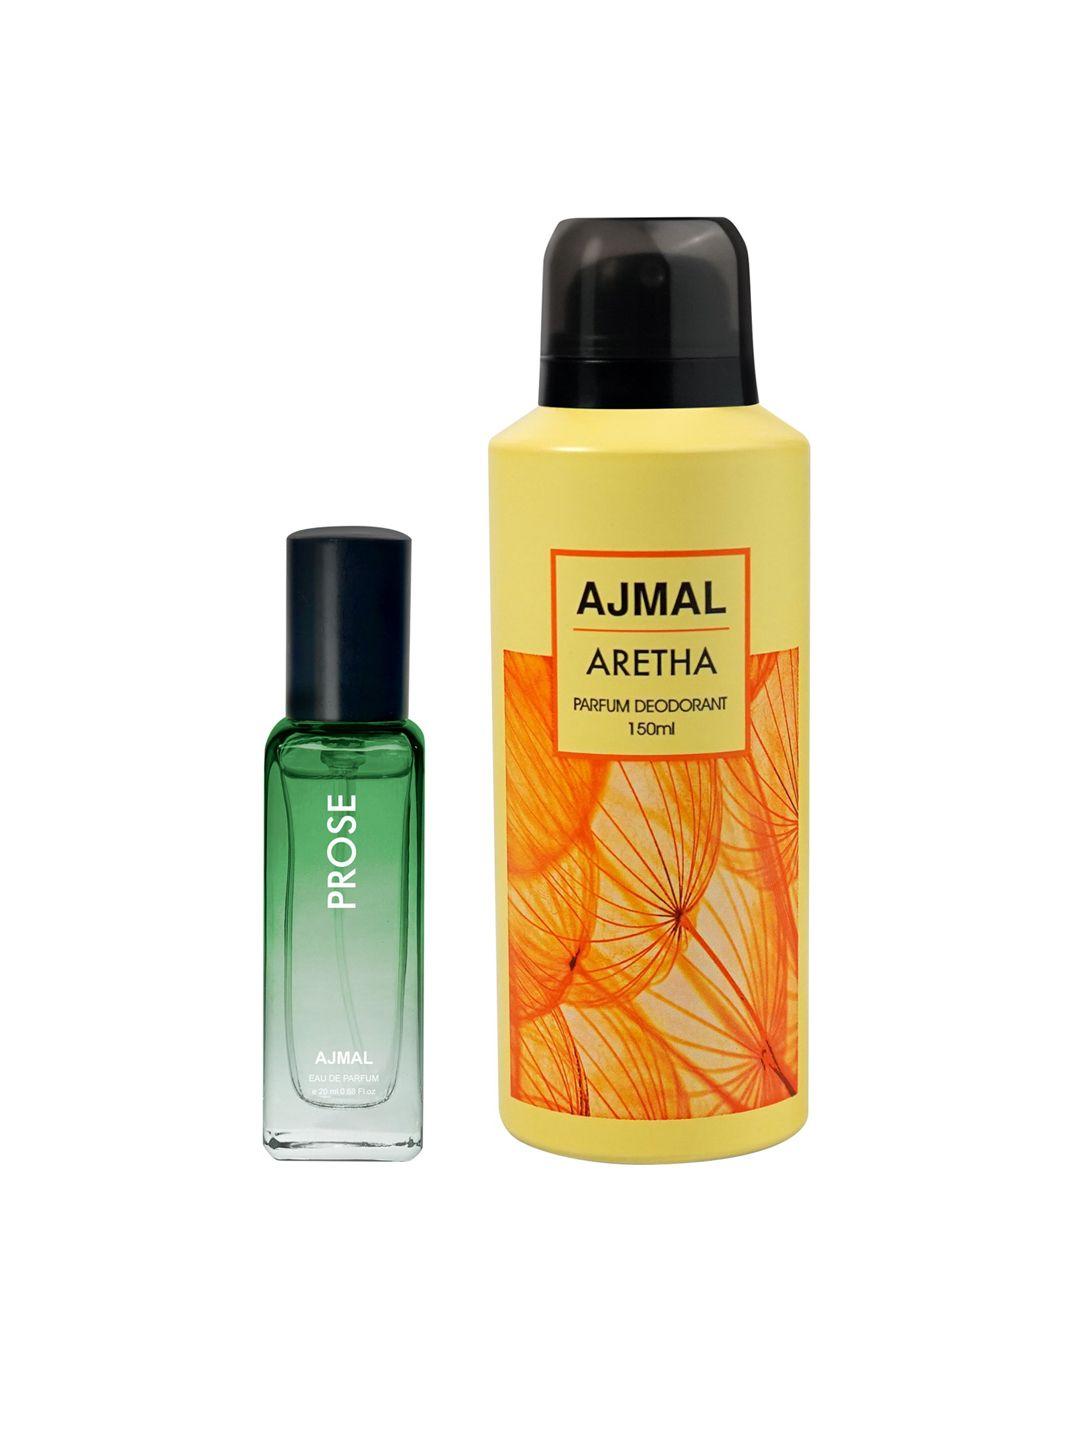 ajmal set of prose eau de parfum - 20 ml & aretha deodorant spray - 150 ml